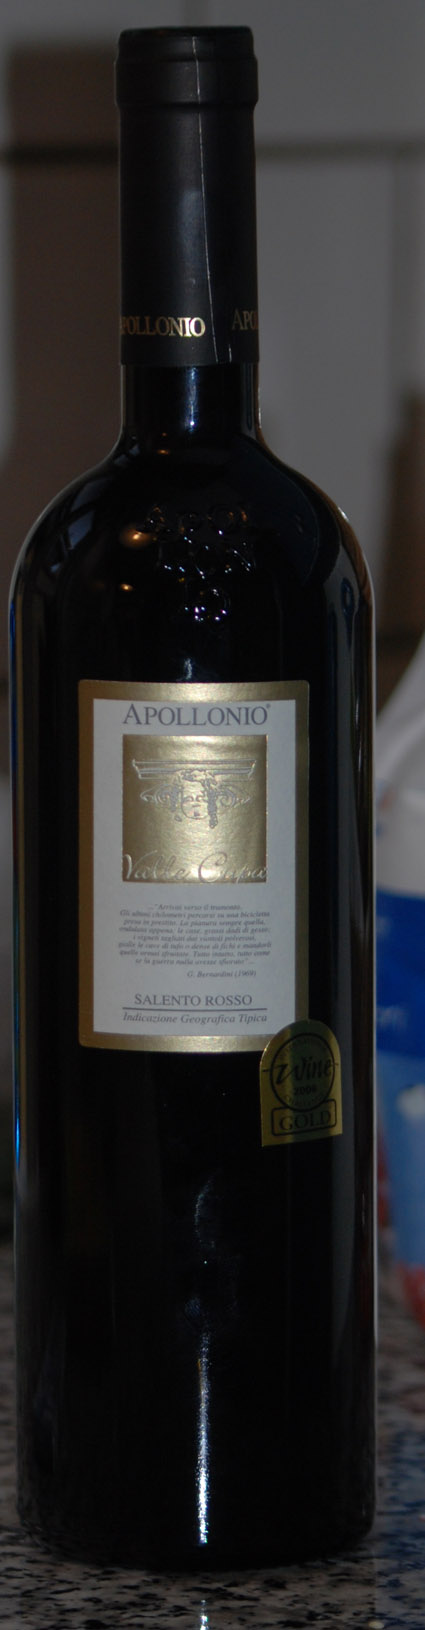 Valle Cupa Salento ( Apollonio ) 2001